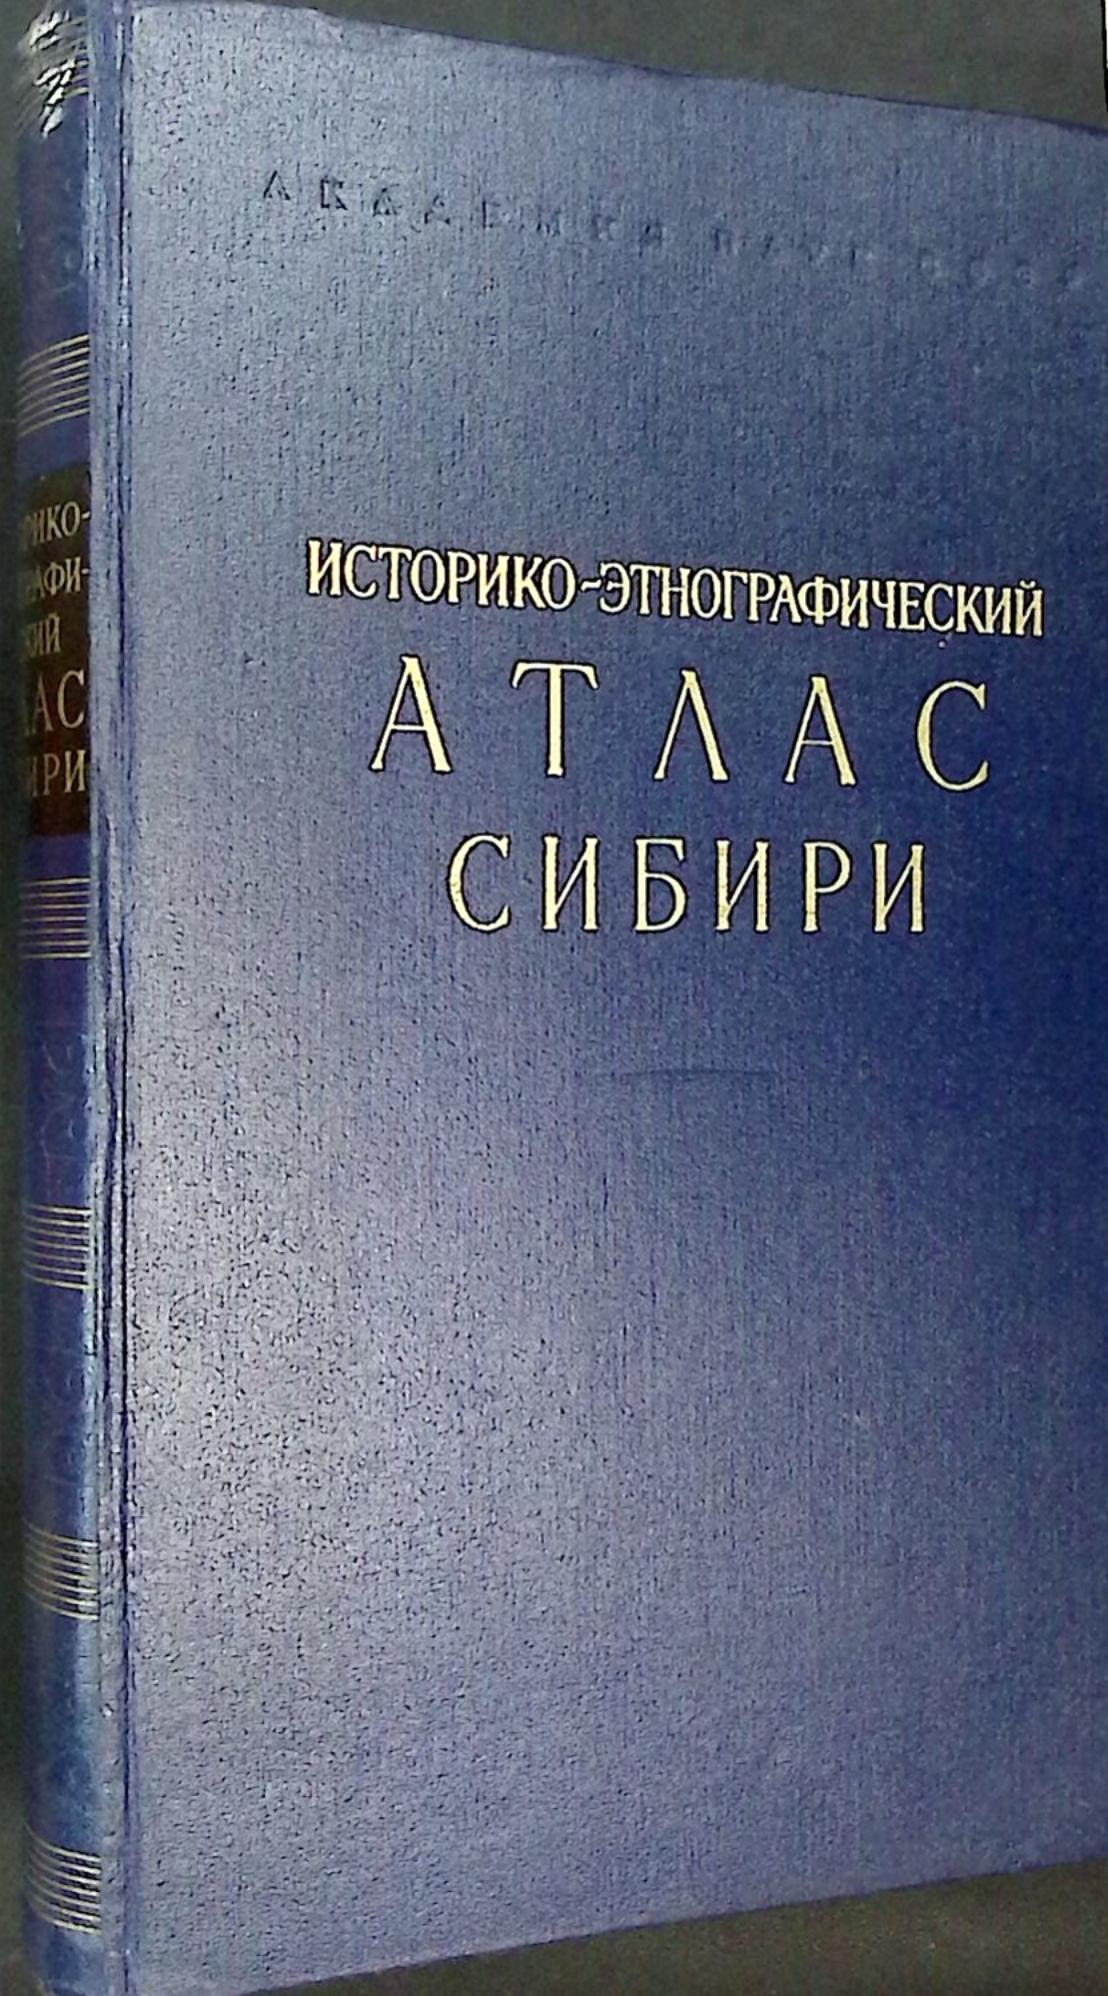 Istoriko-etnograficheskiy Atlas Sibiri [Historical Ethnographical Atlas of Siberia]